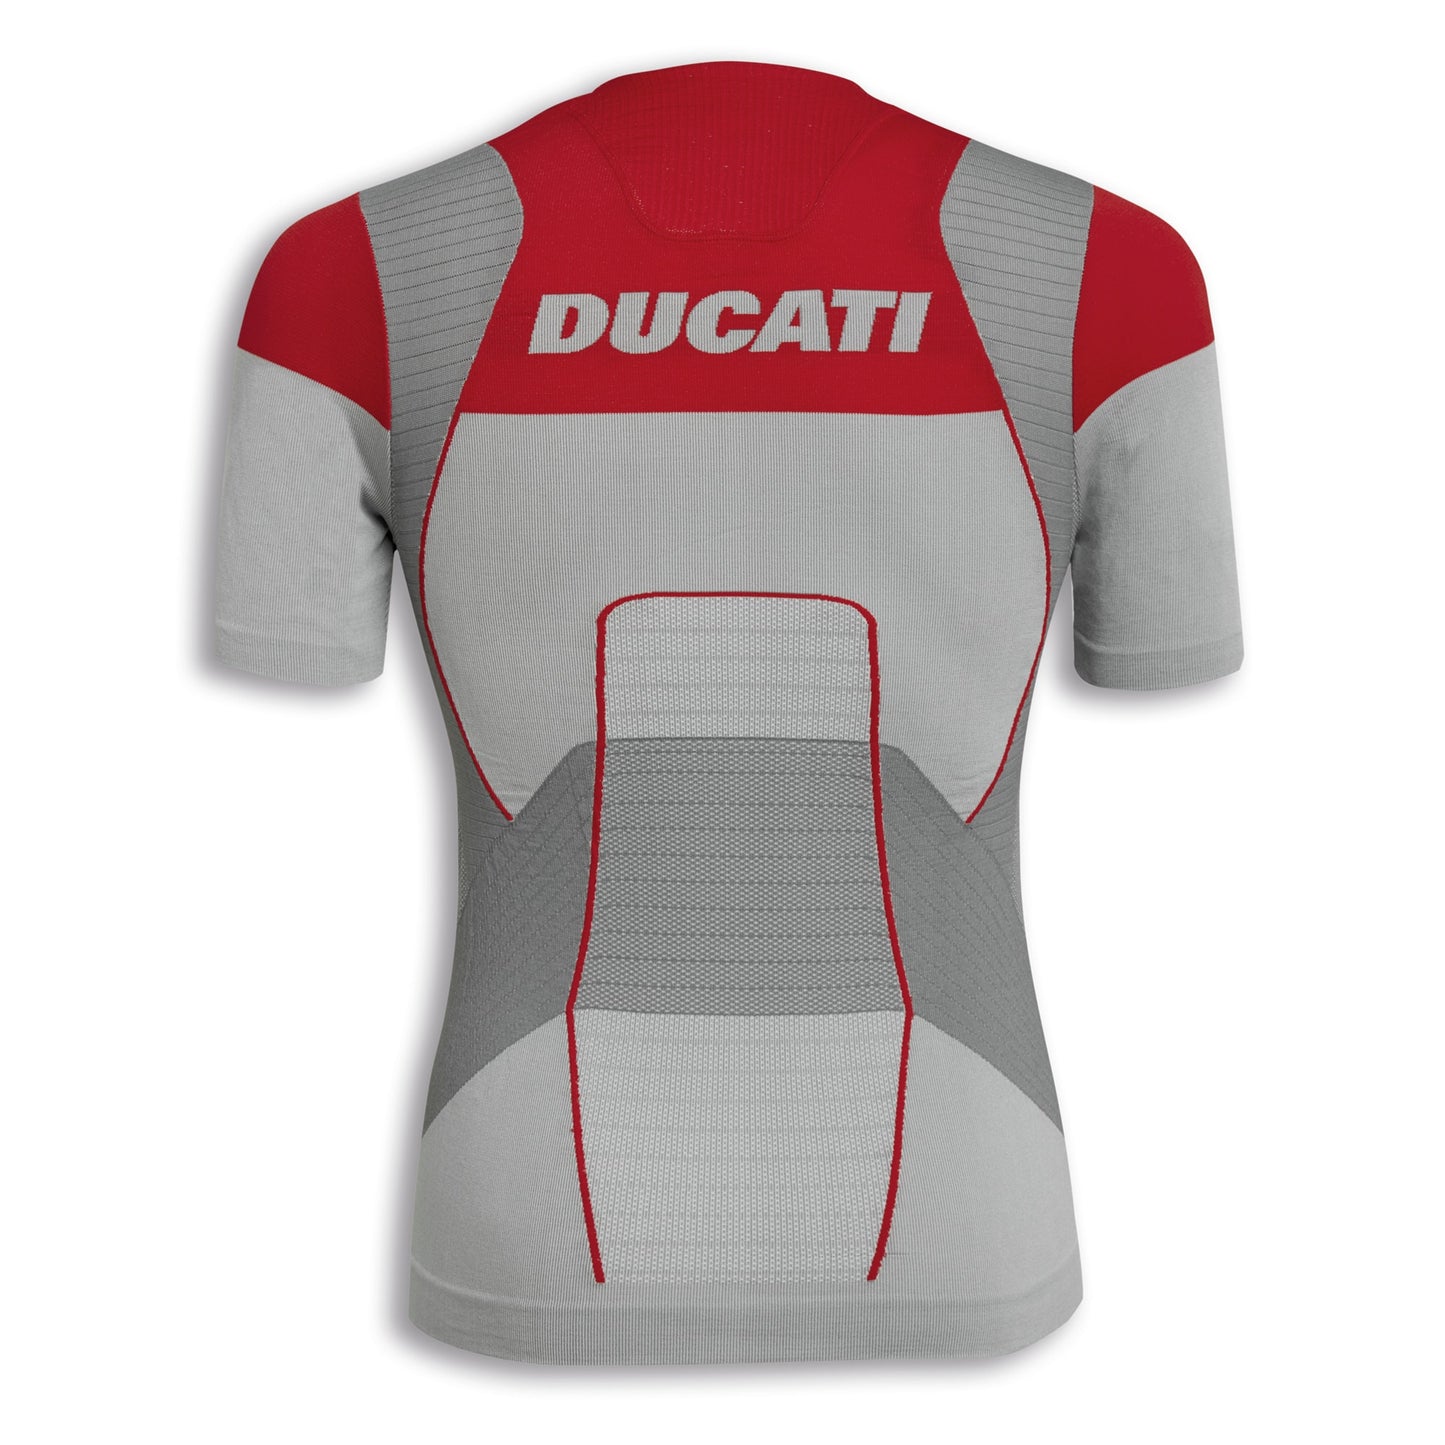 Ducati Cool Down 2 Technical T-Shirt